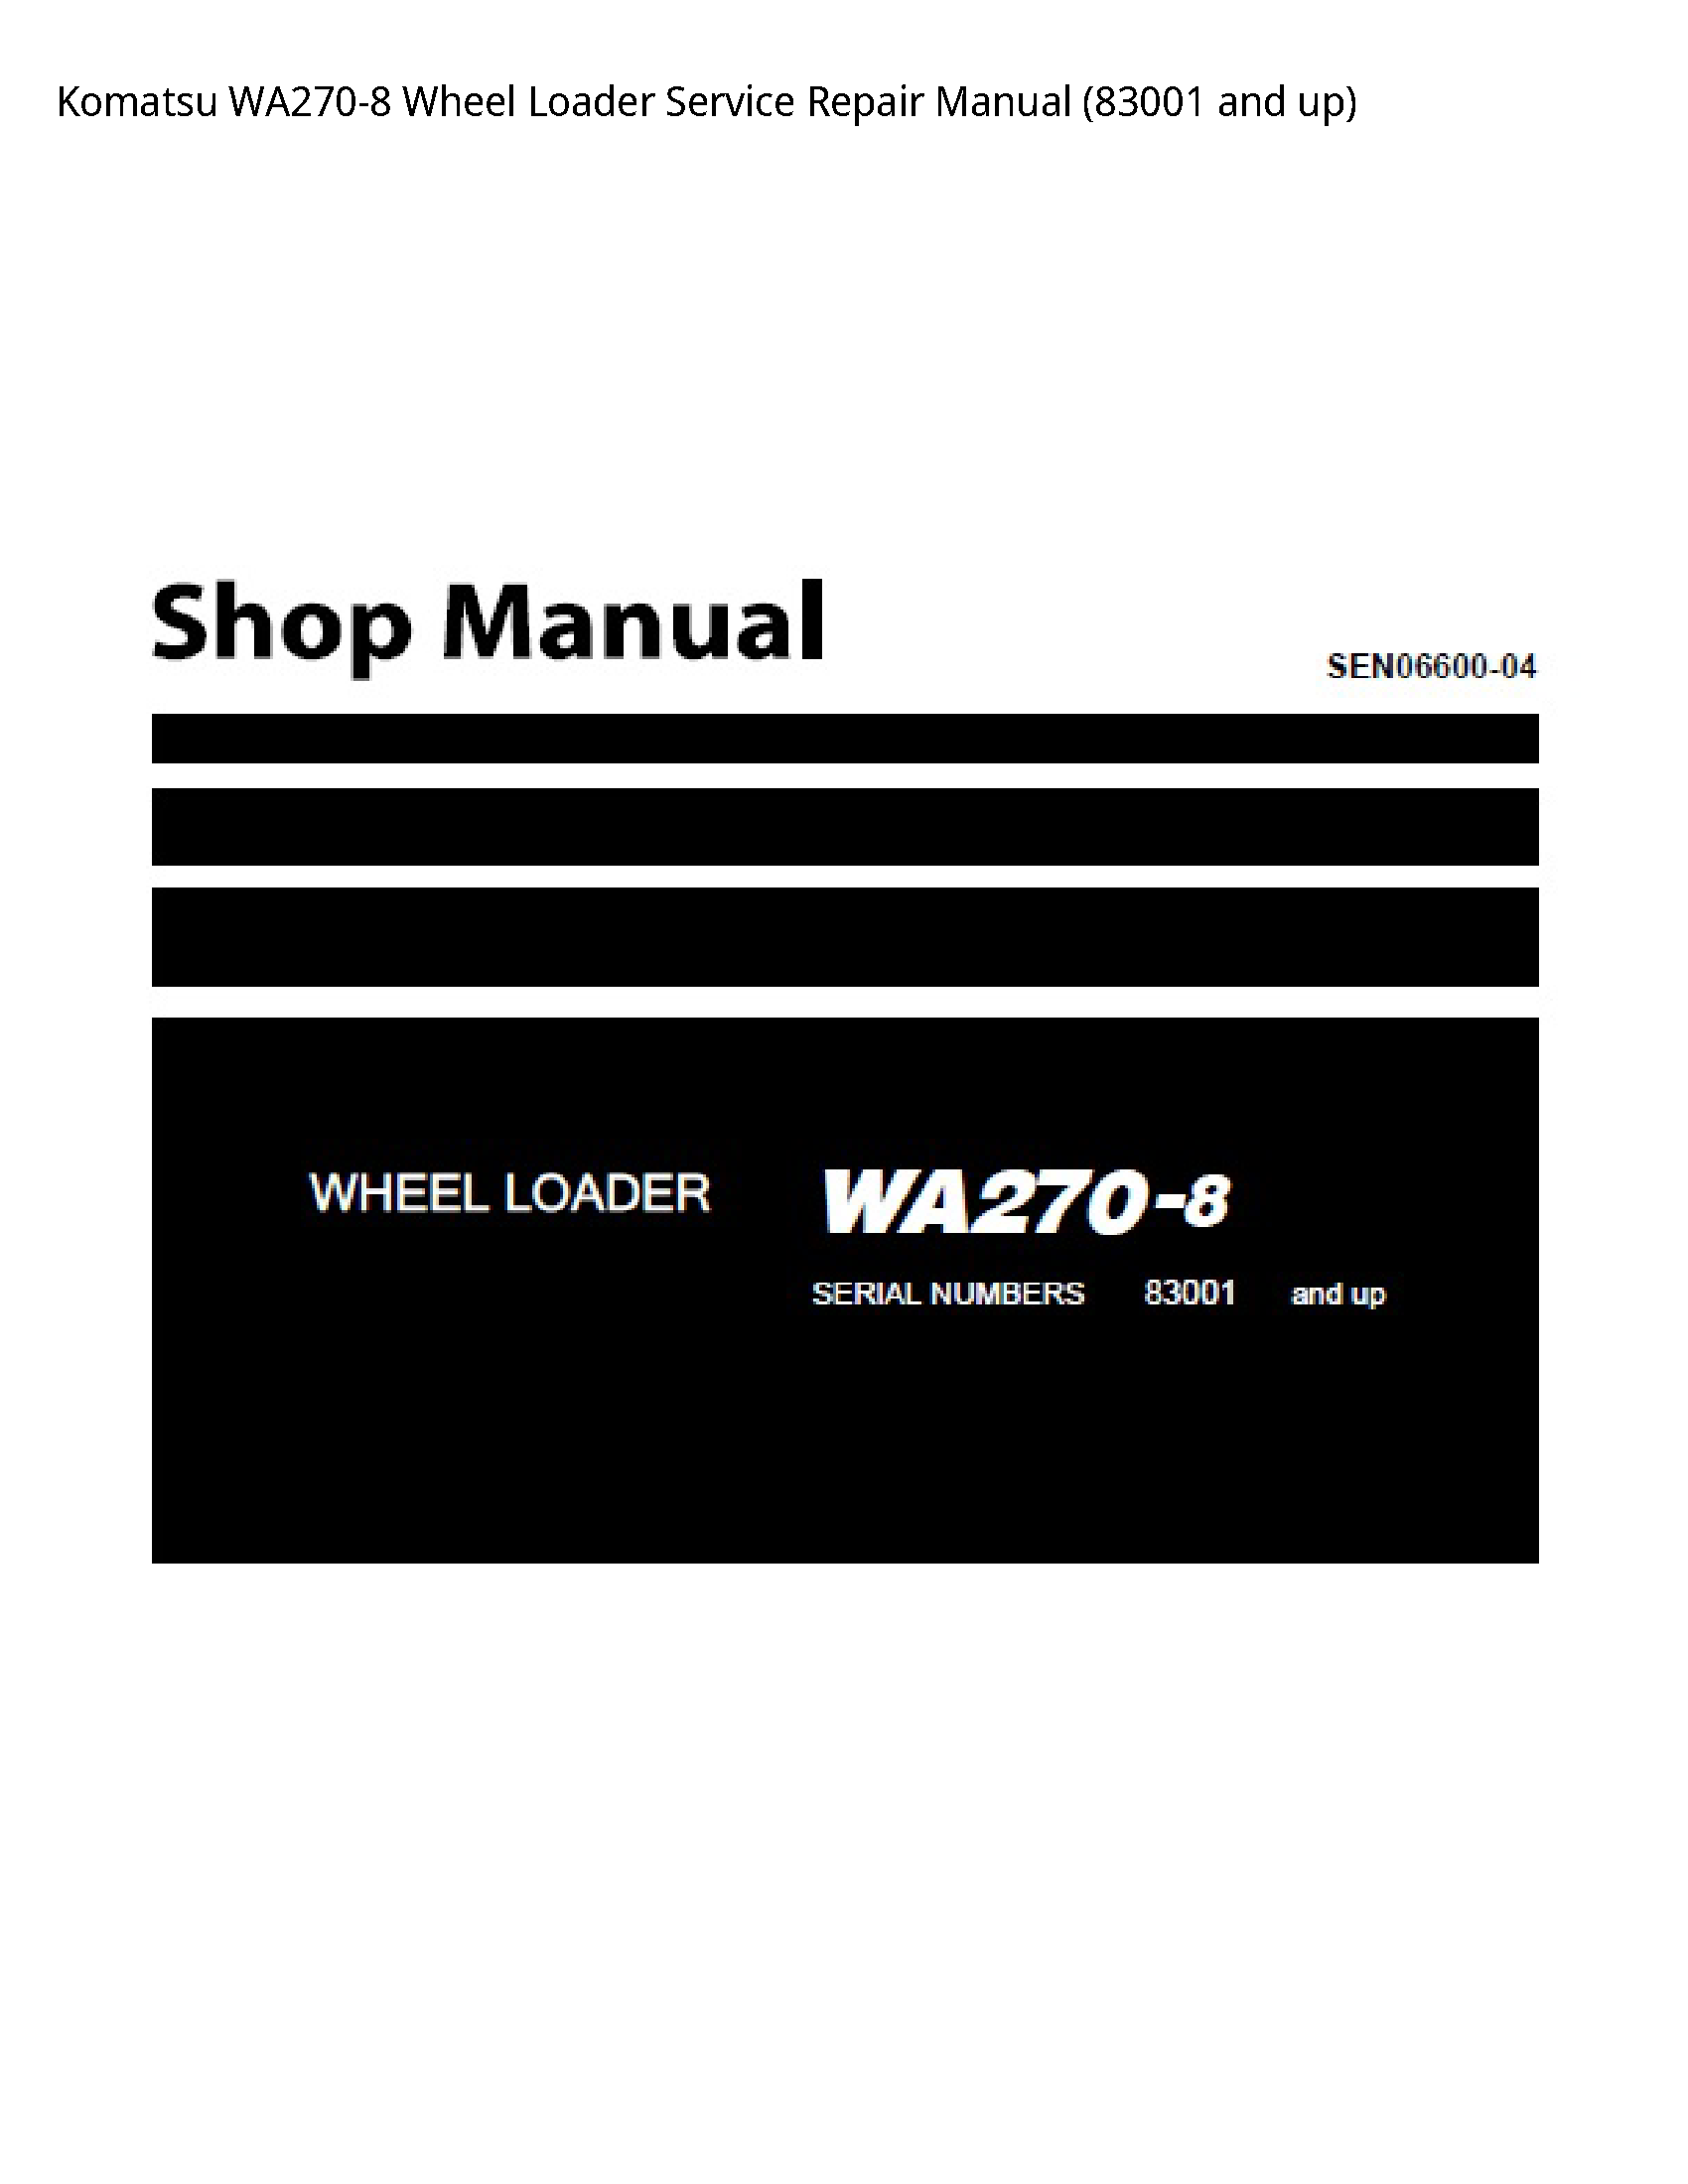 KOMATSU WA270-8 Wheel Loader manual